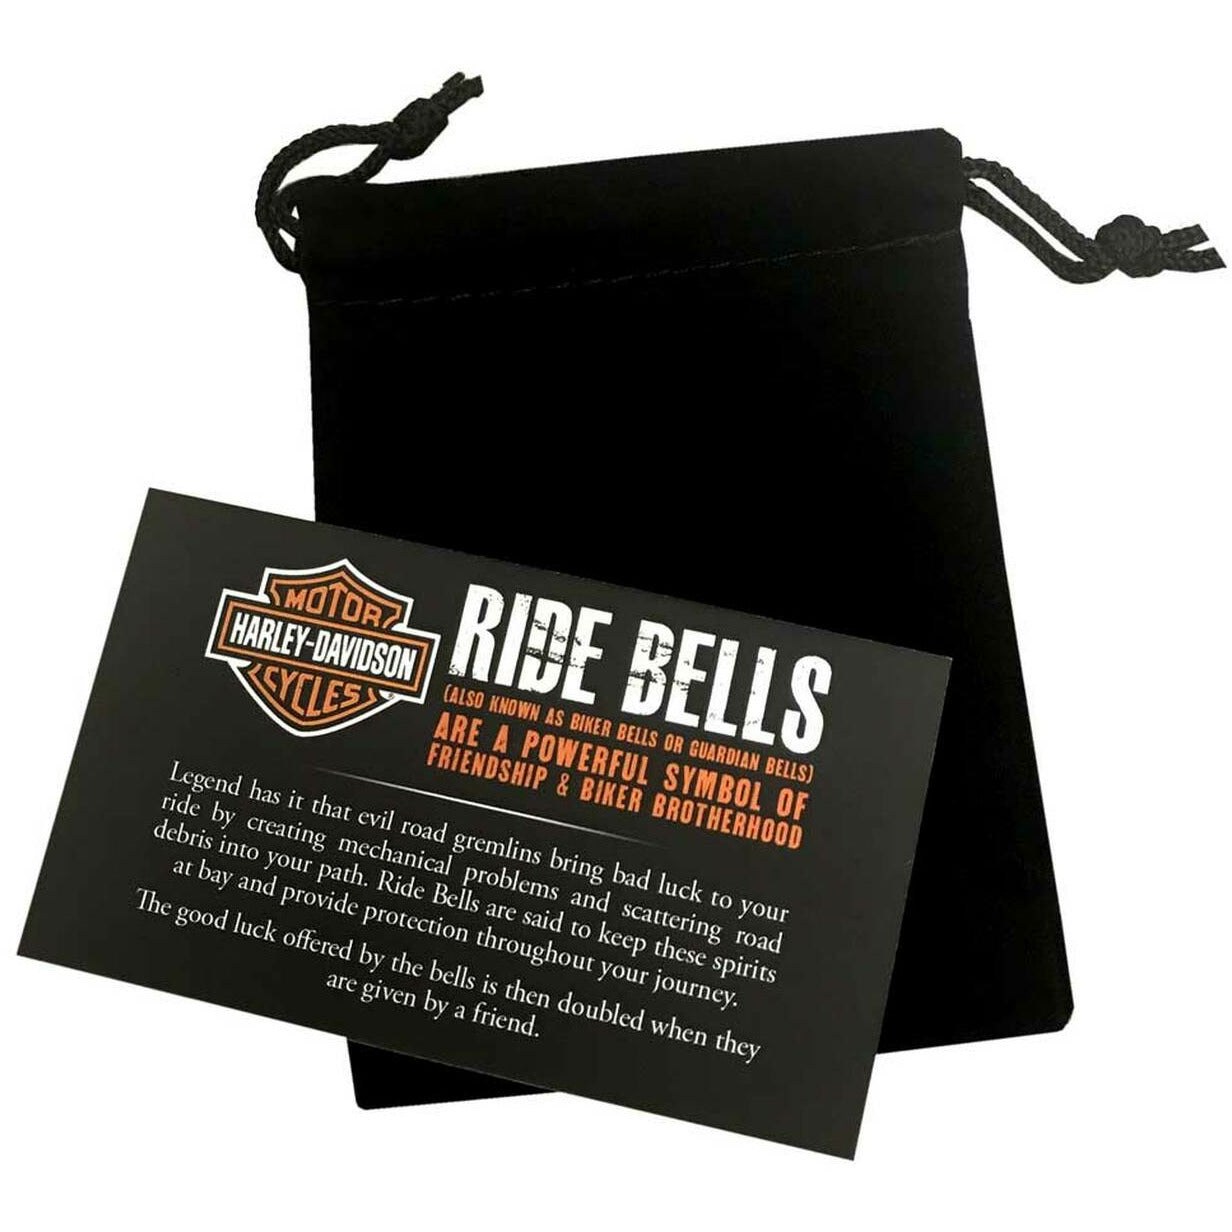 Harley-Davidson® Bolt With Bar & Shield Logo Motorcycle Ride Bell